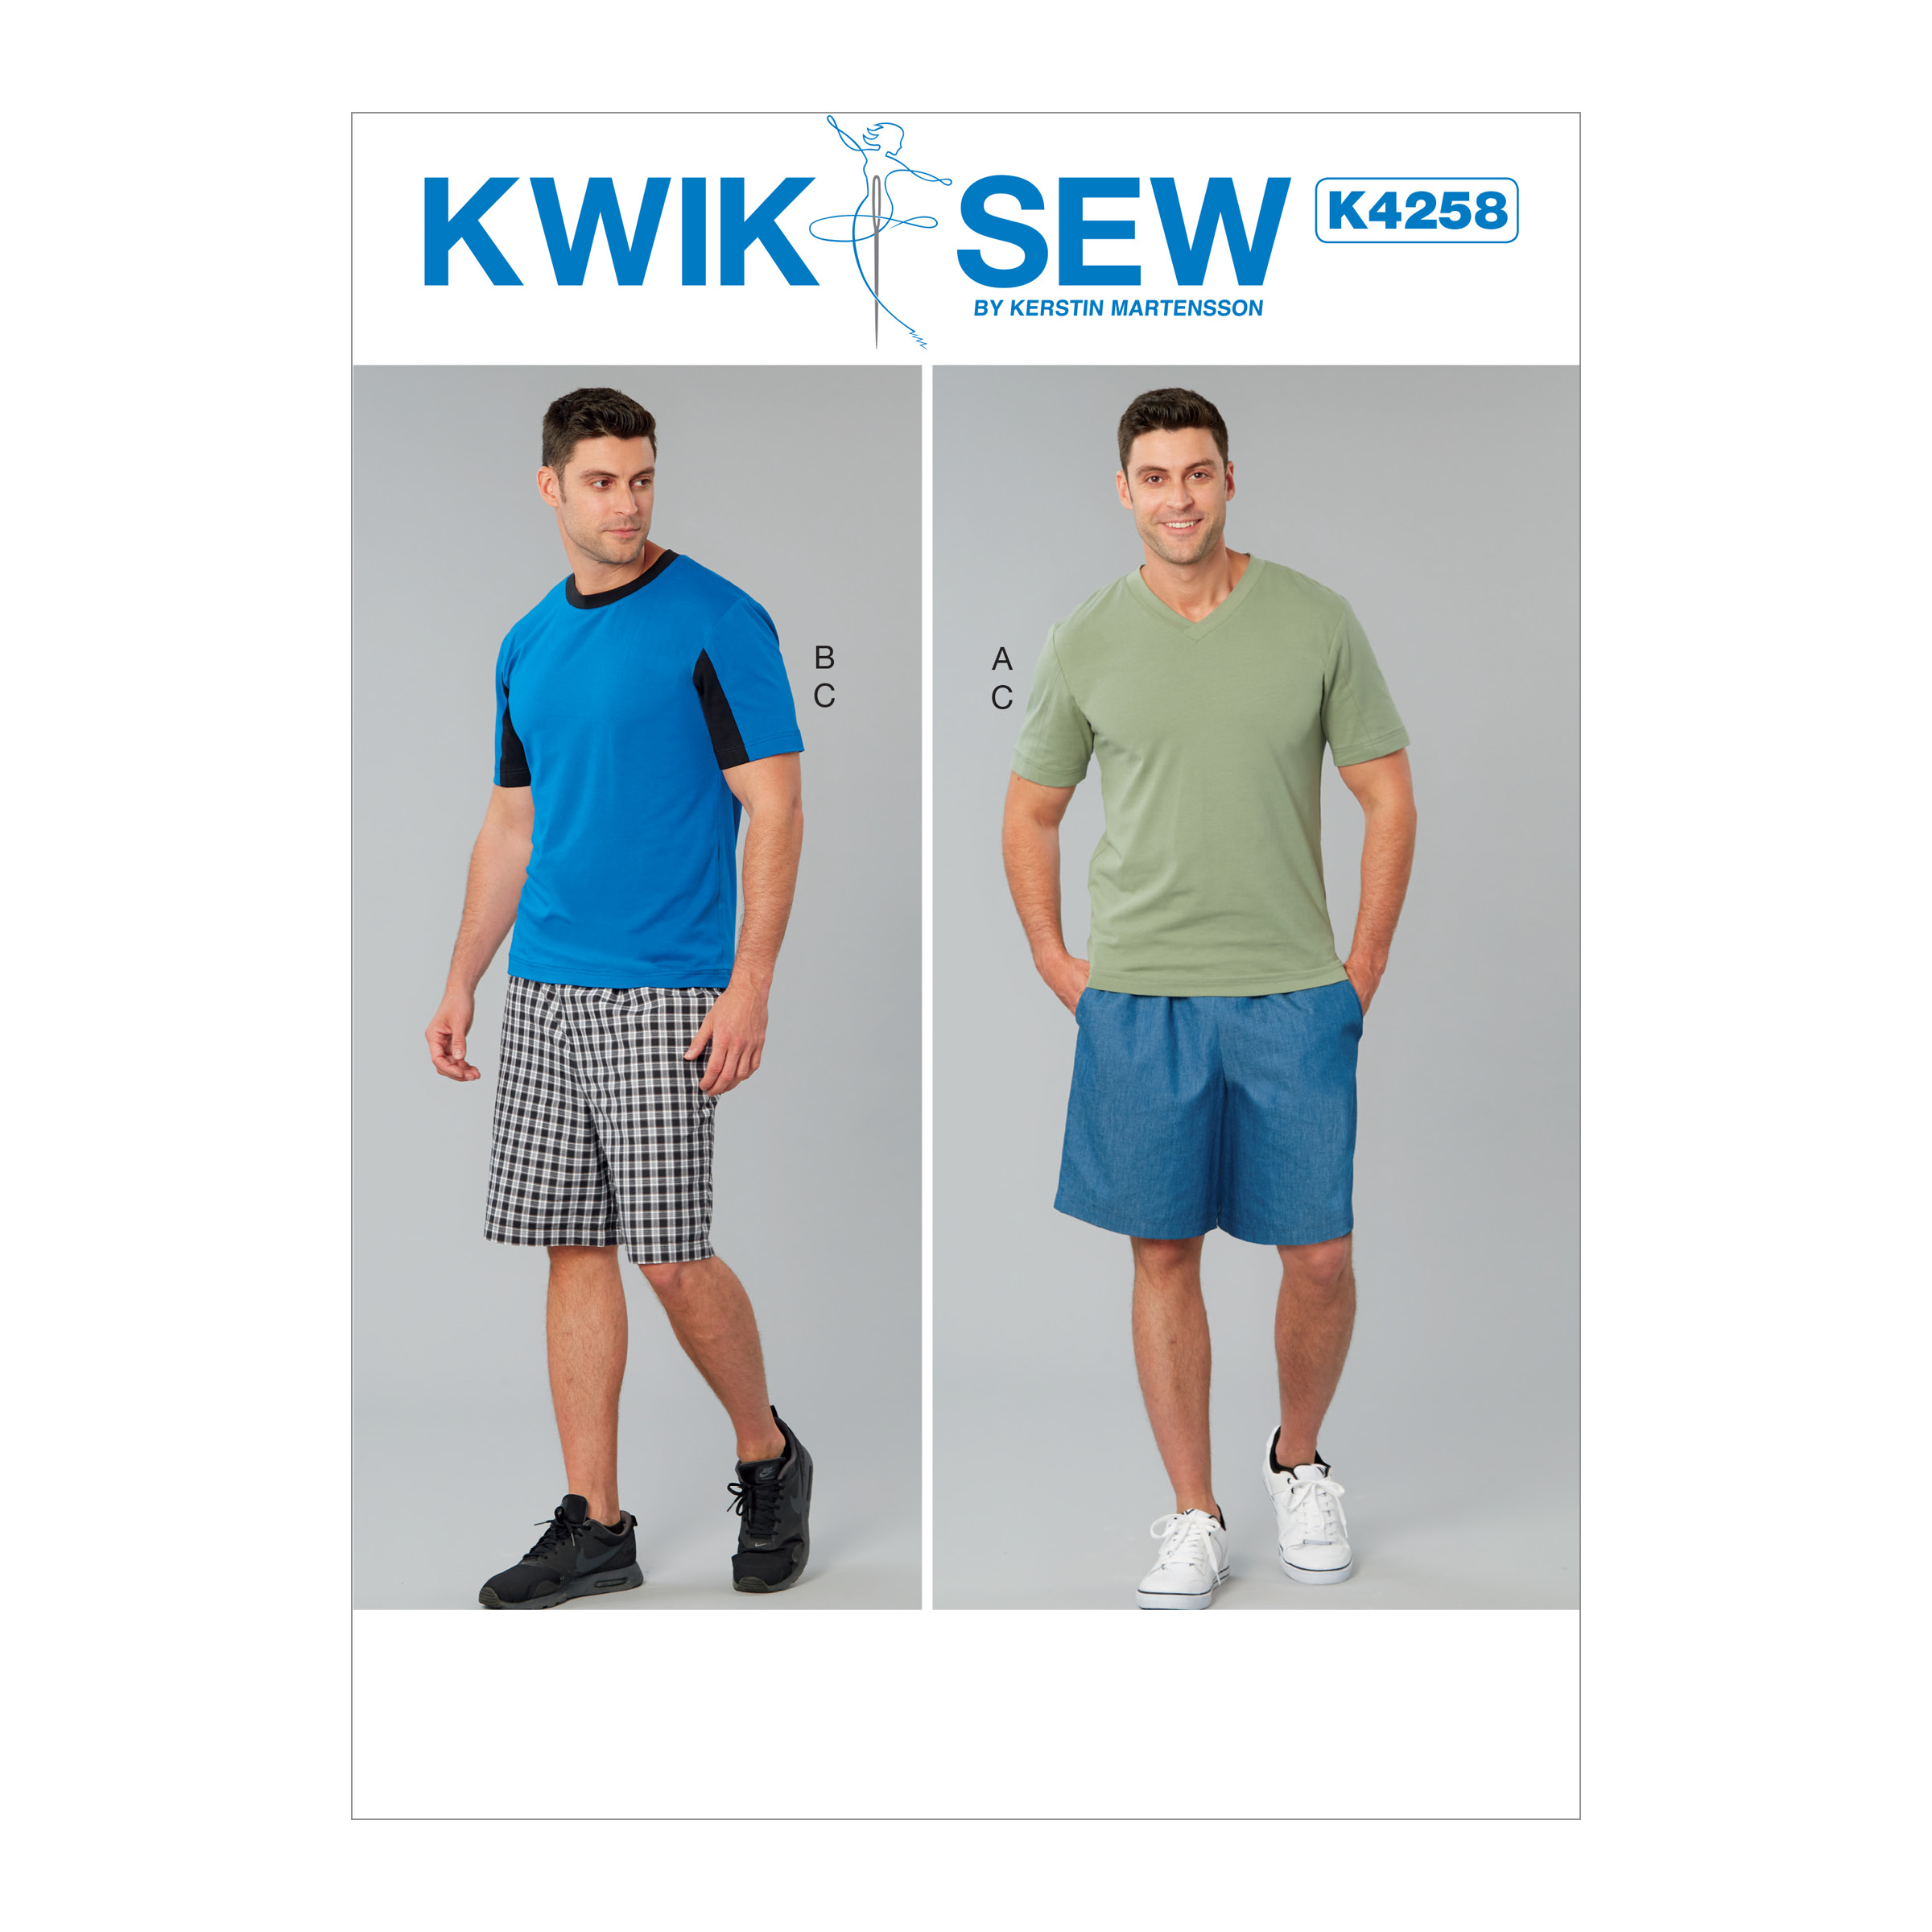 Kwik Sew 4258 Men's Tops and Shorts